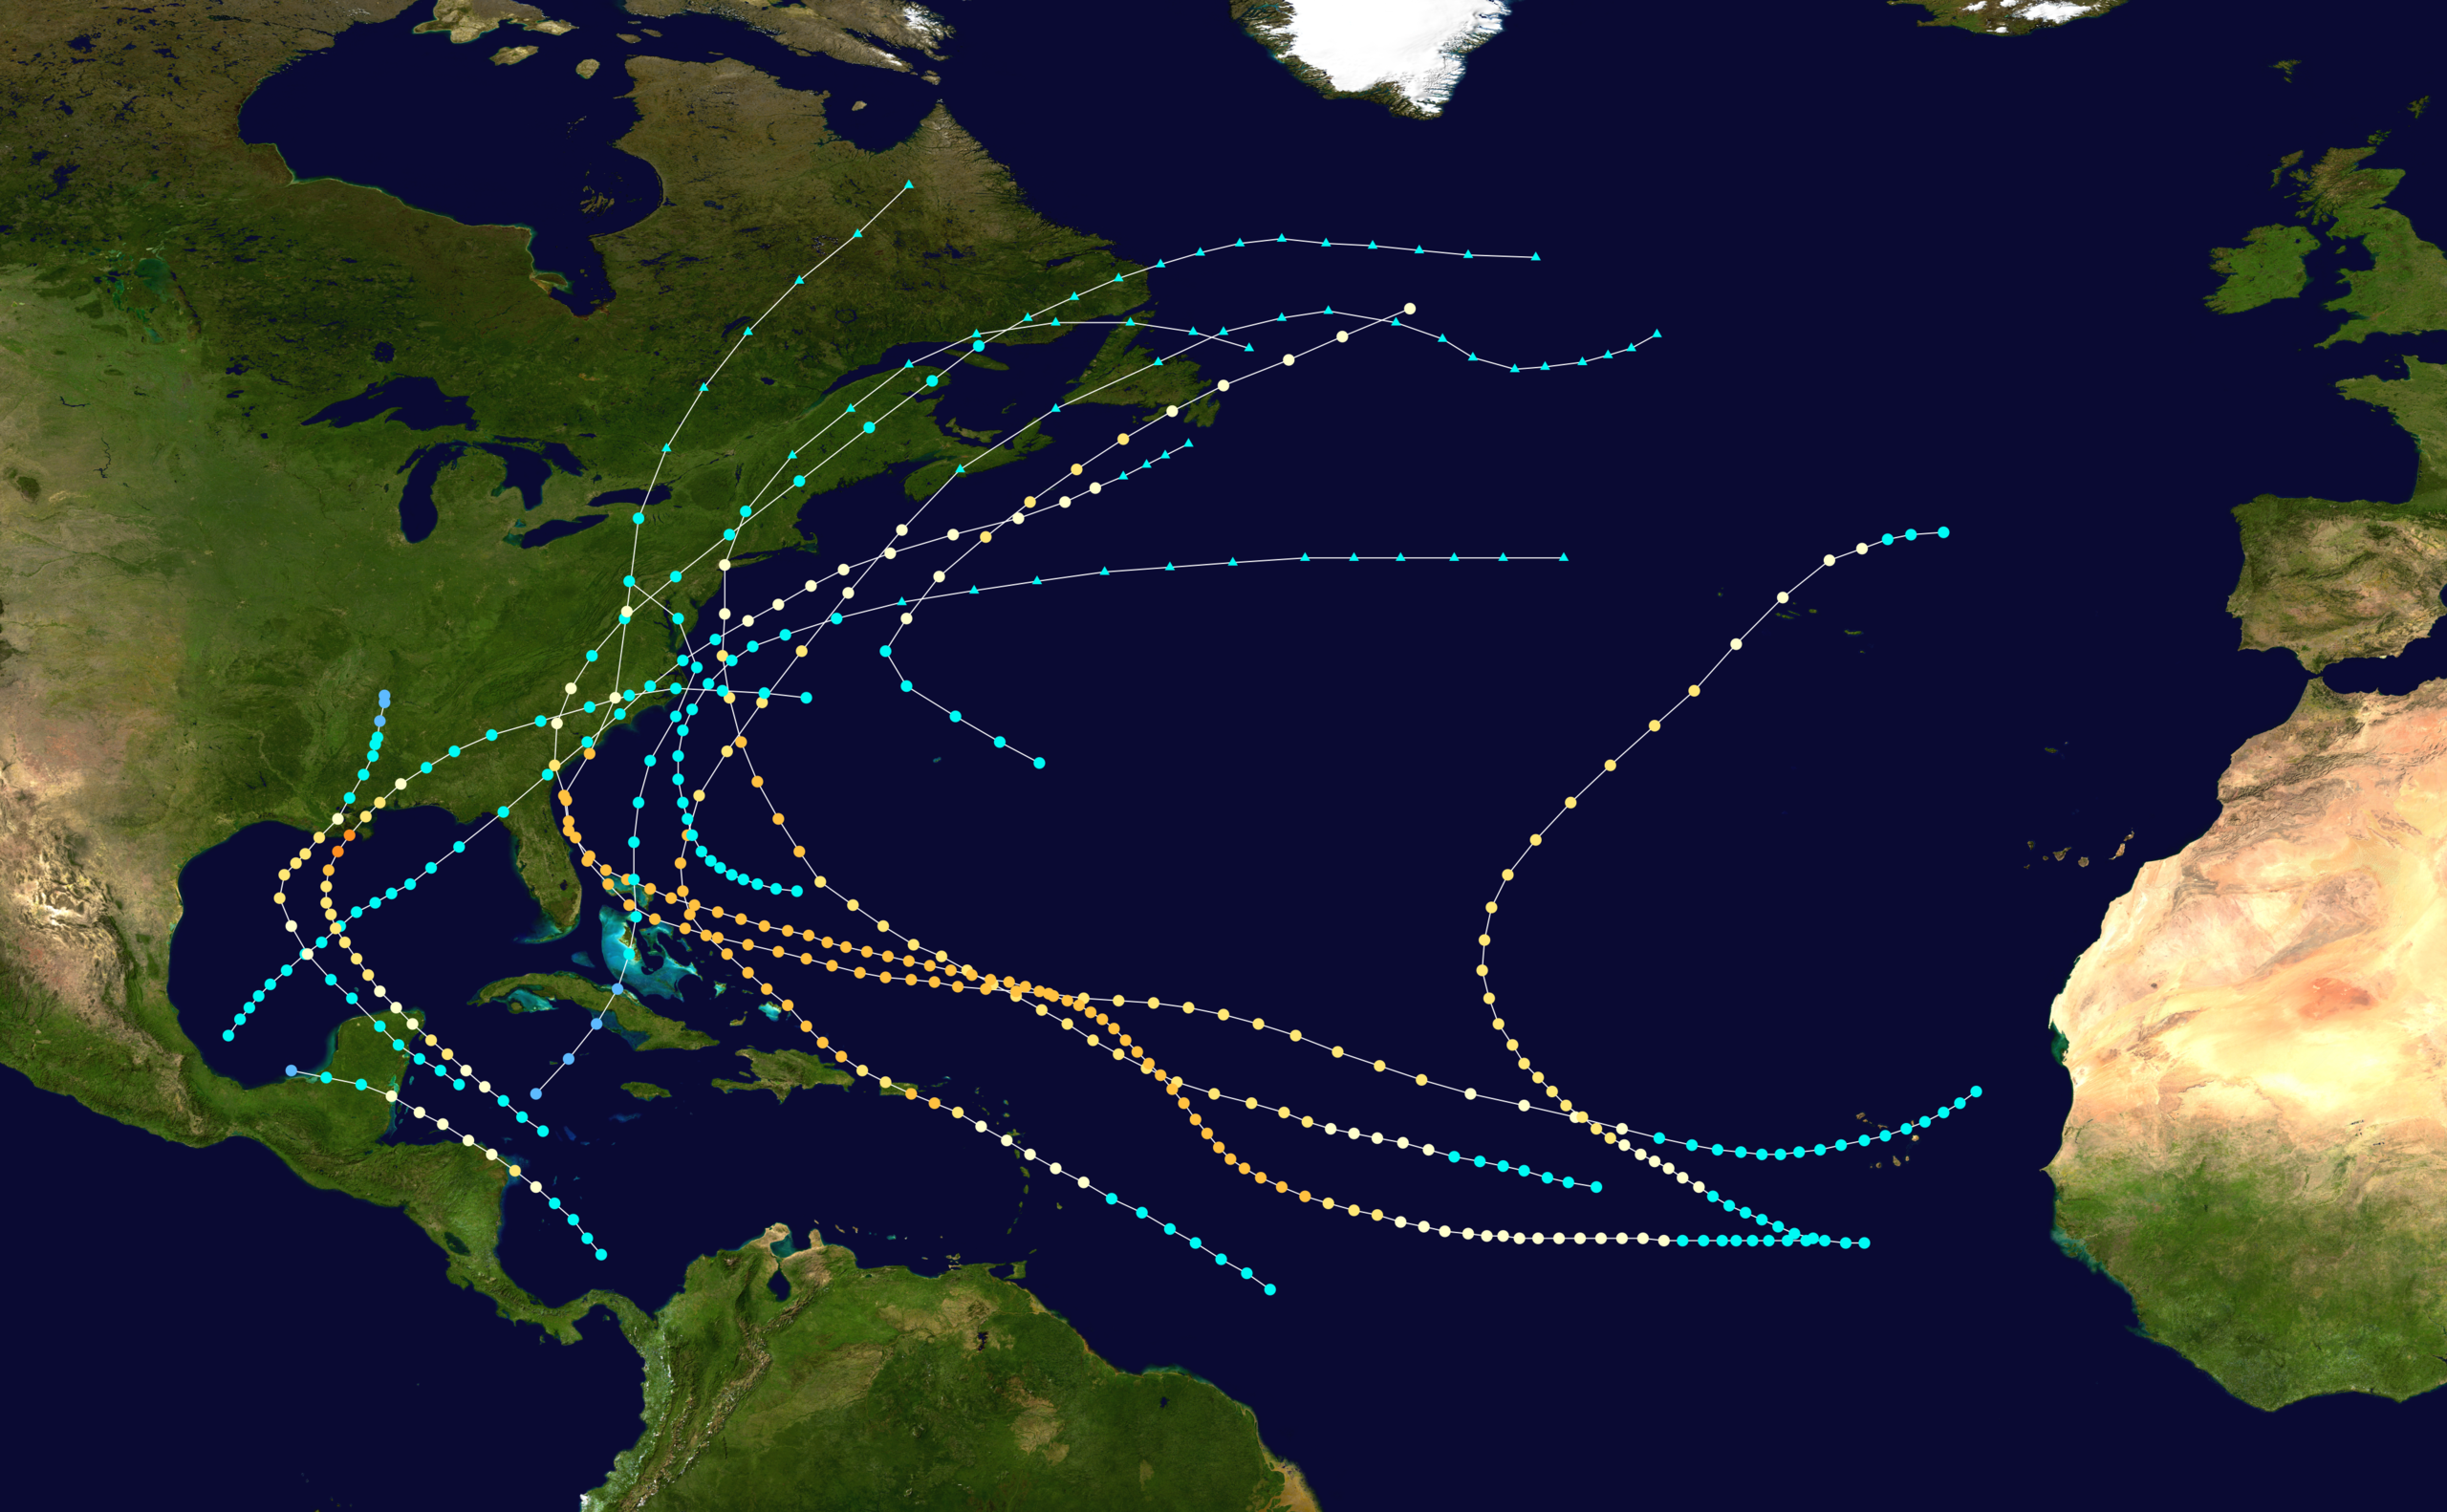 2560px-1893 Atlantic hurricane season summary map